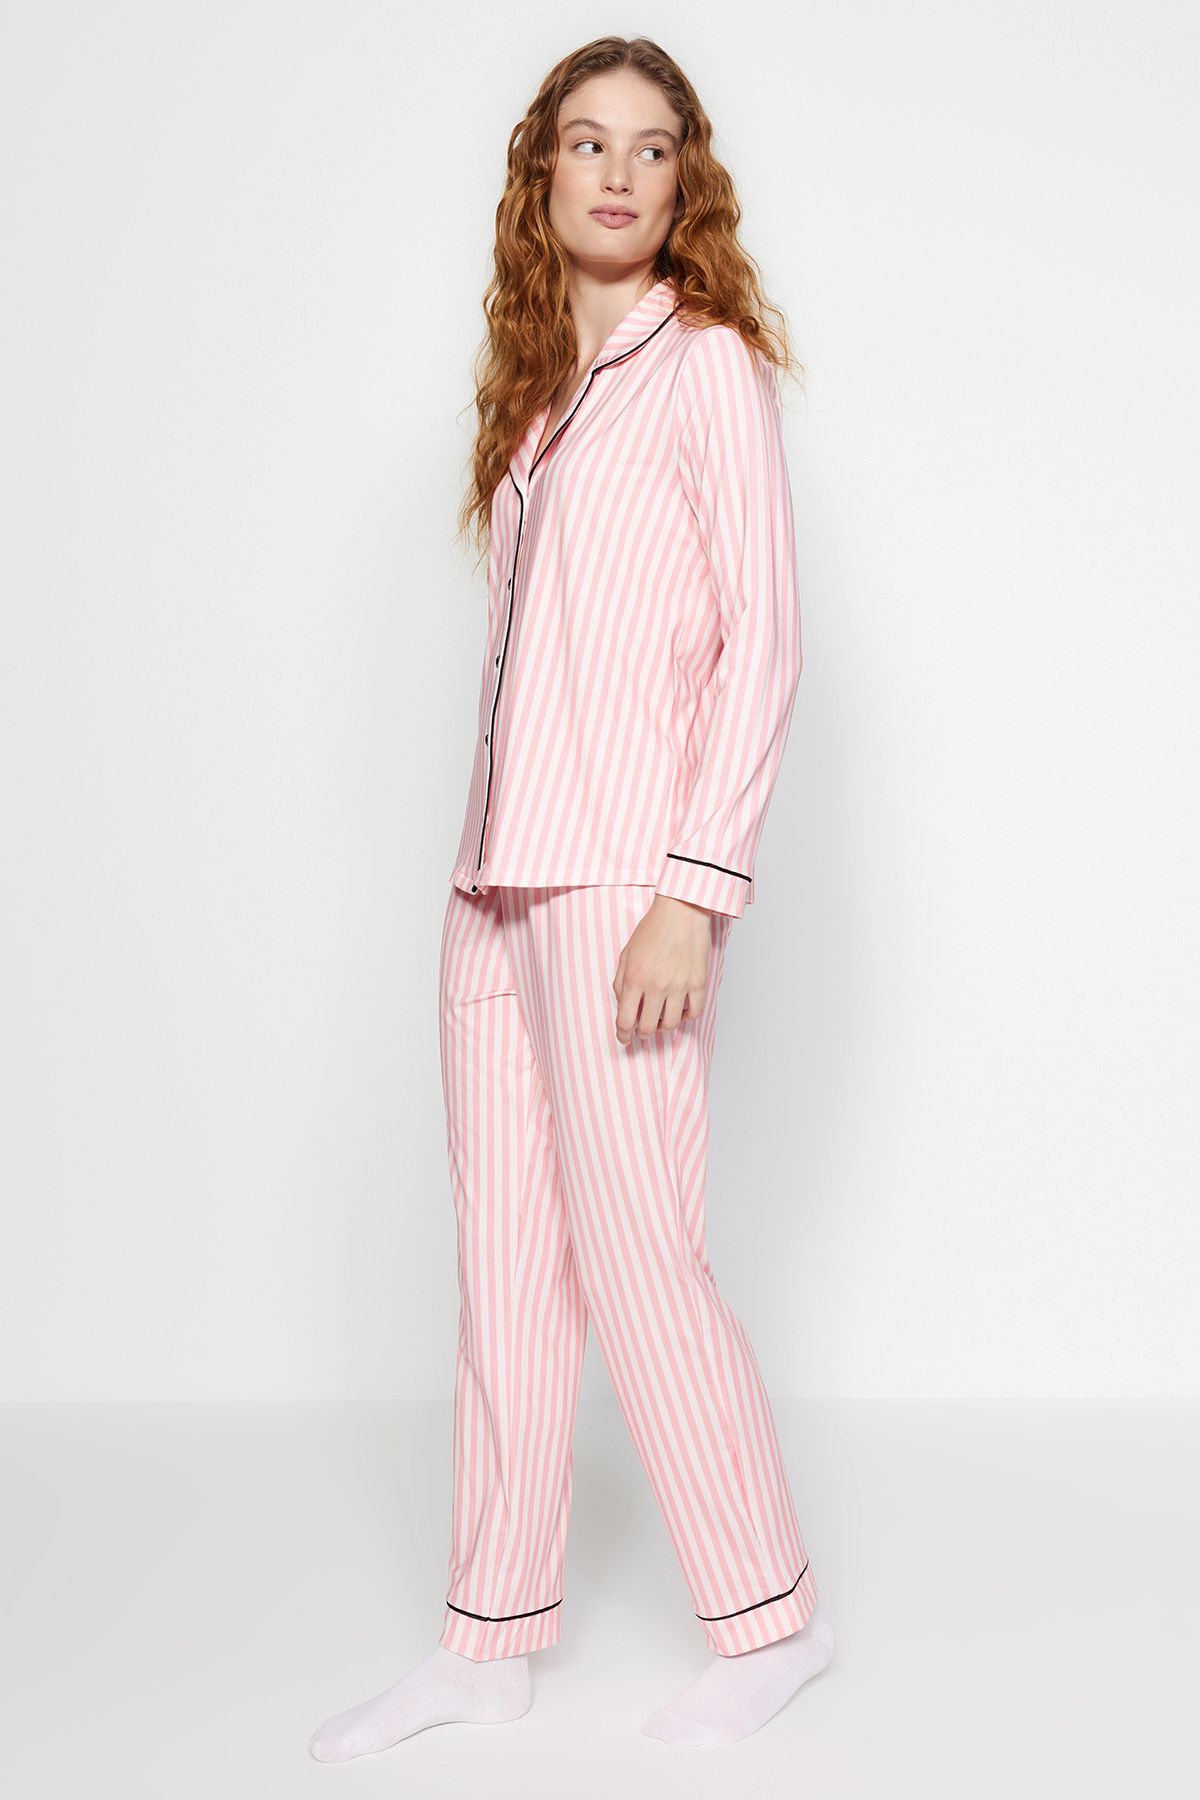 Trendyol Collection - Trendyol Pyjama - Rosa Gestreift set -